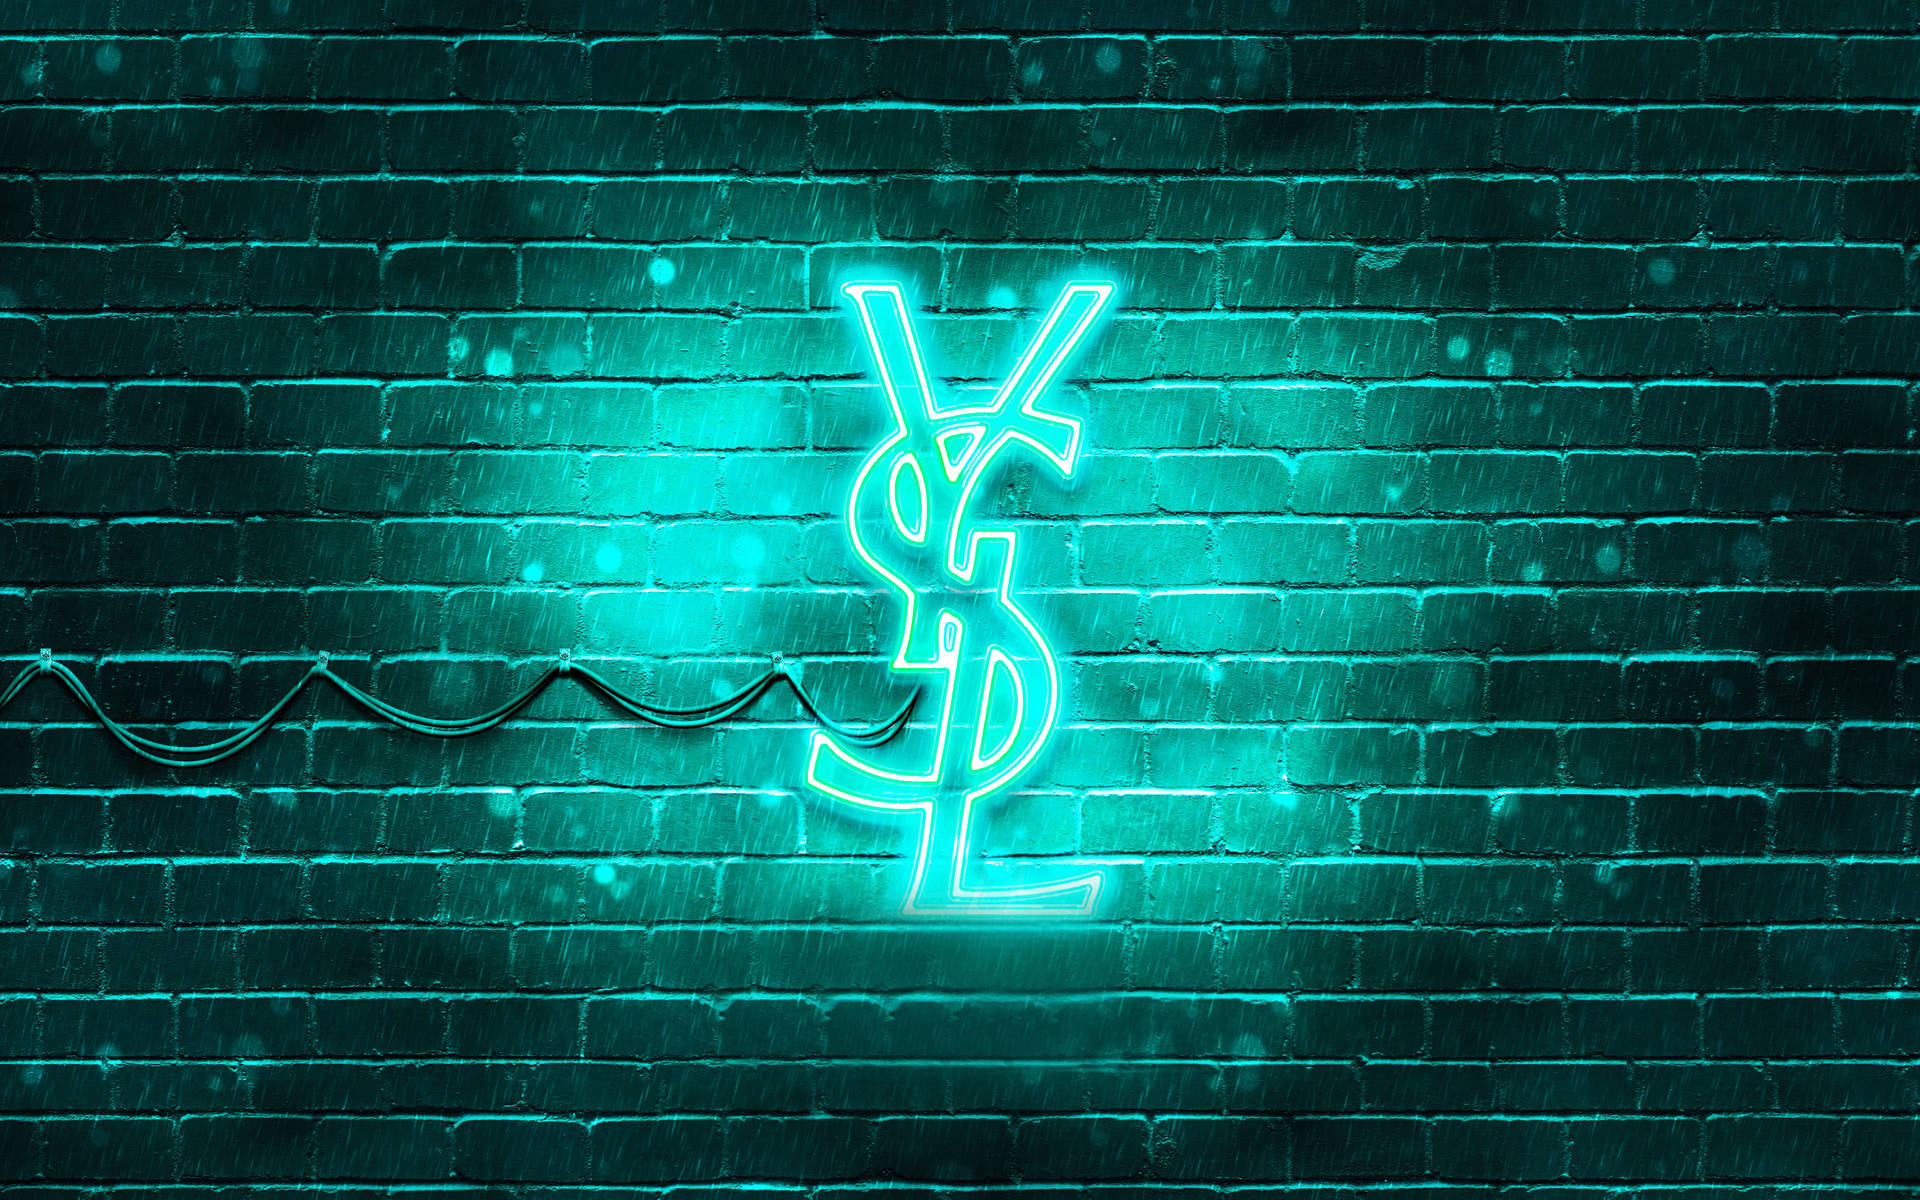 Turquoise Ysl Neon Lighting Background